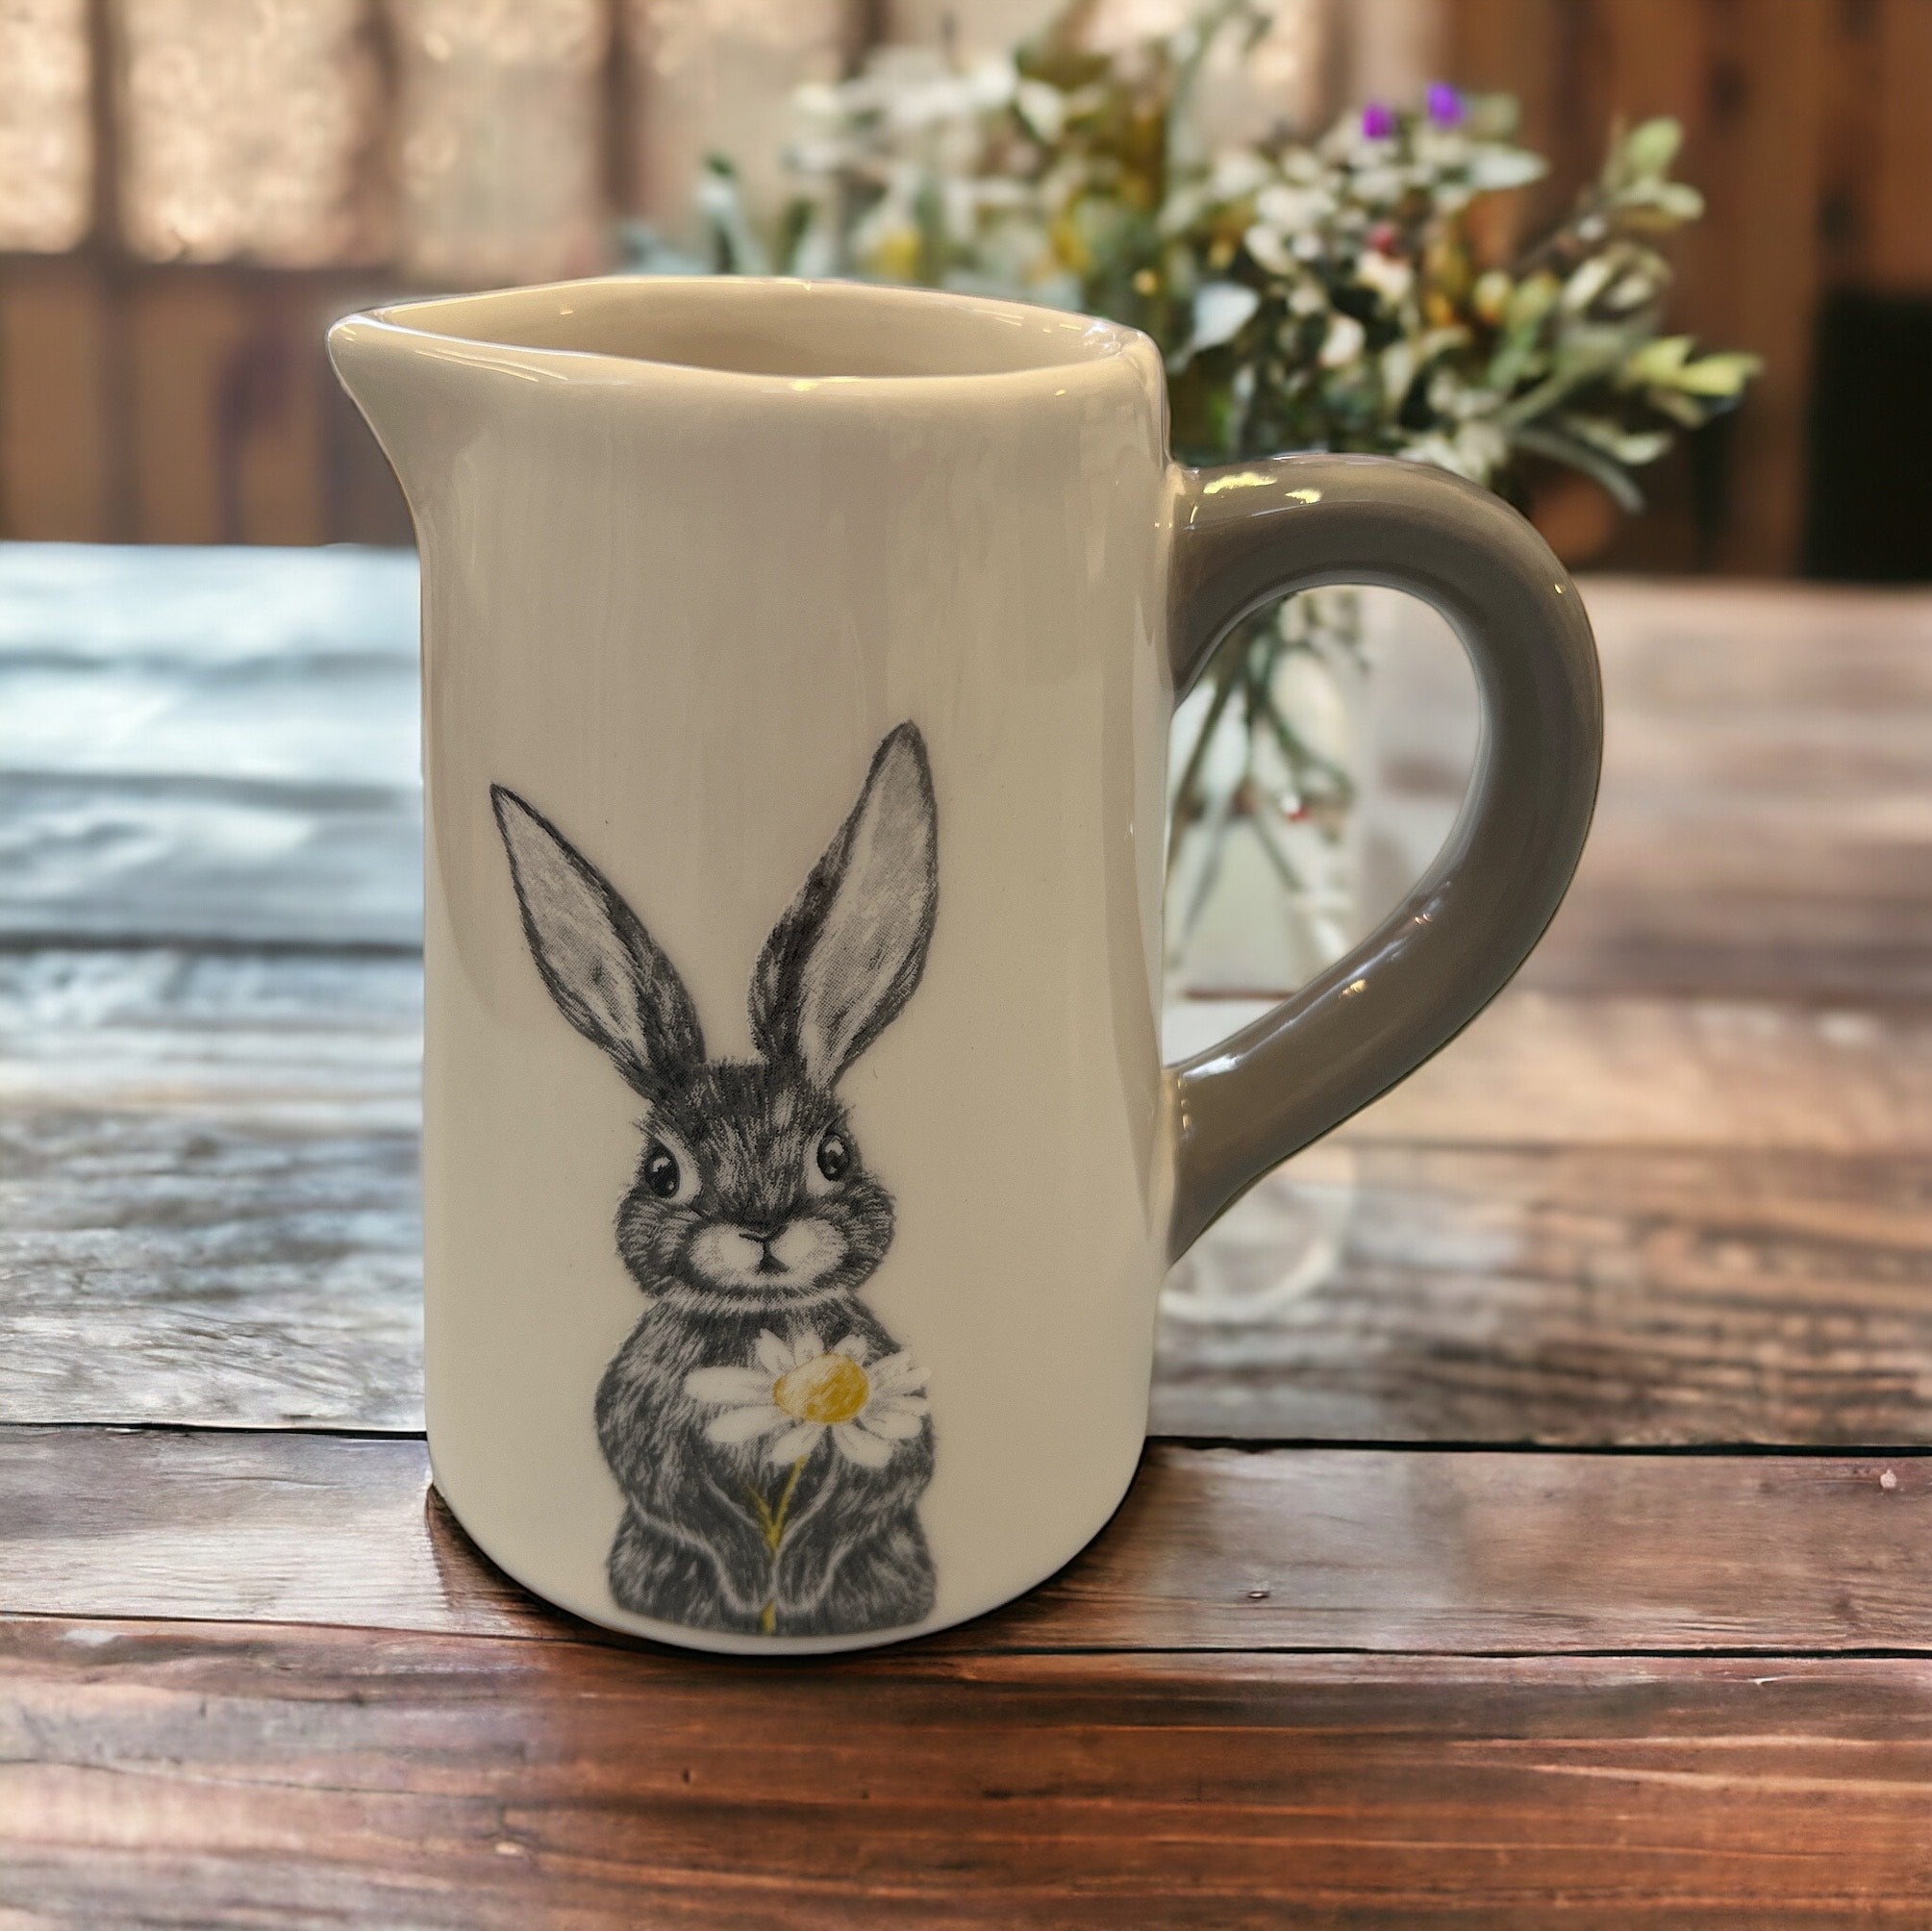 Ceramic Decorative Spring Theme Jug With Bunny Rabbit Holding Flowers Illustration 